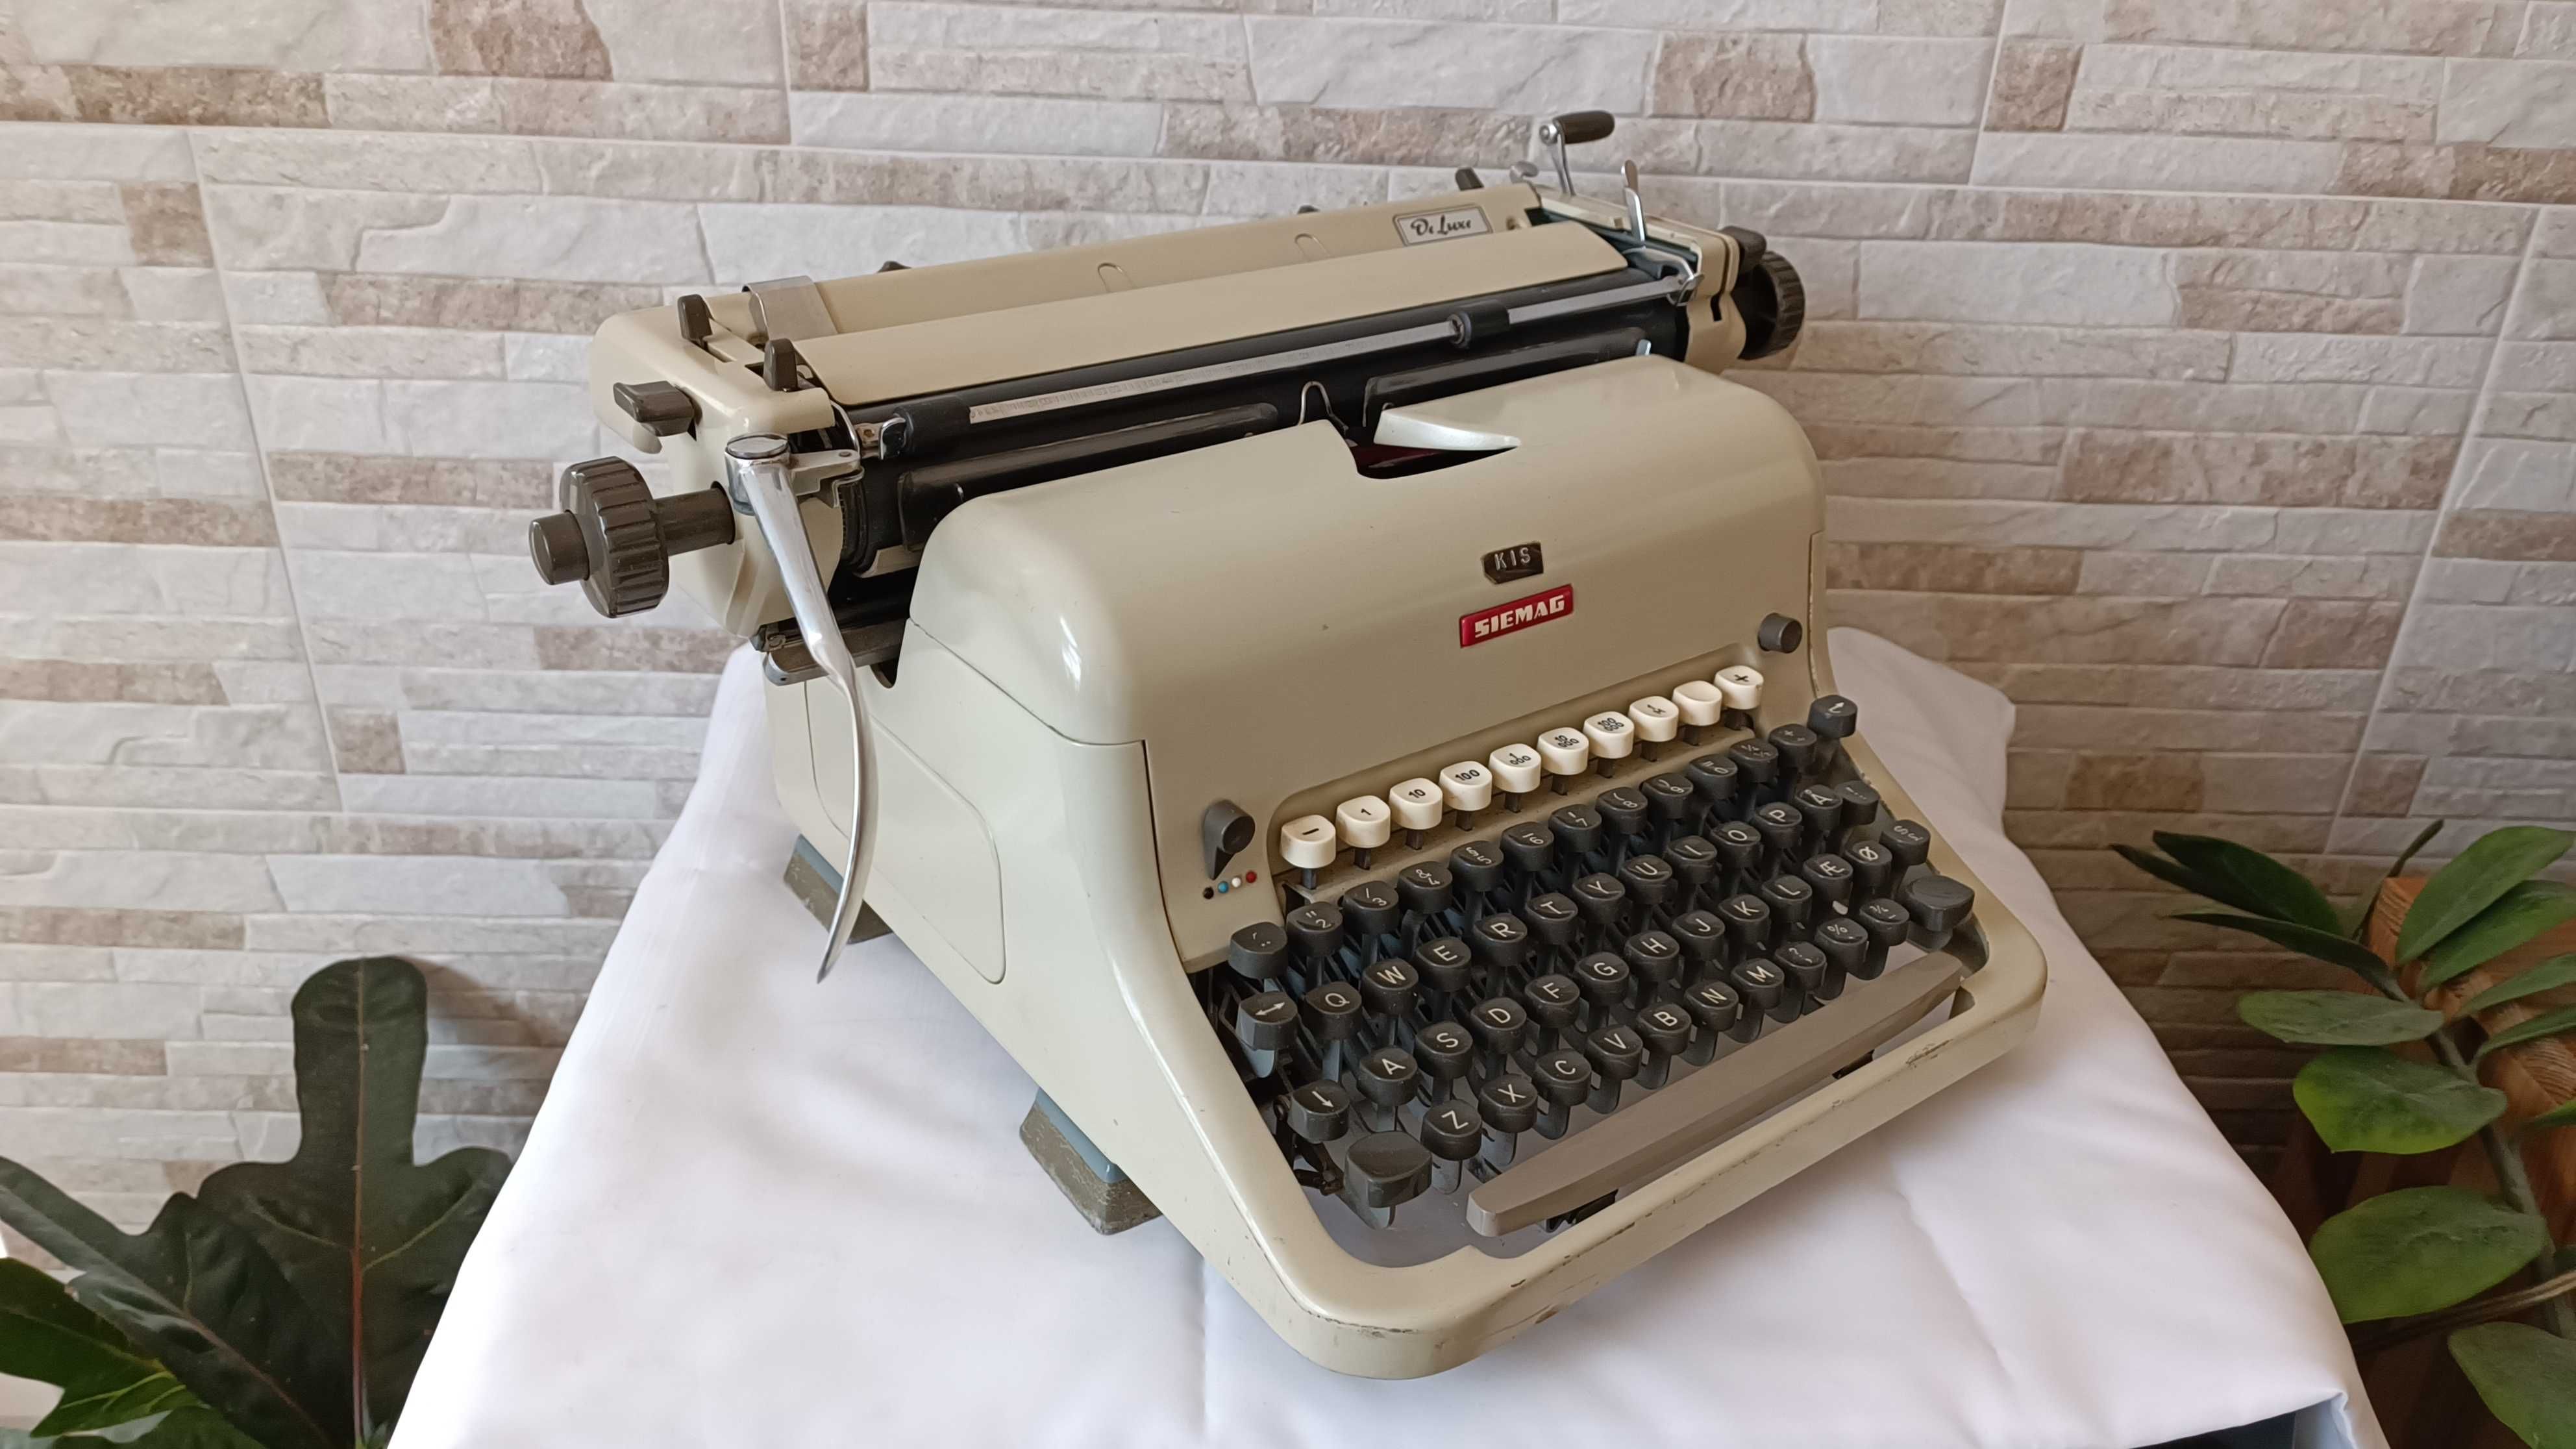 Стара пишеща машина SIEMAG De Luxe - Made in Germany - 1956 г.